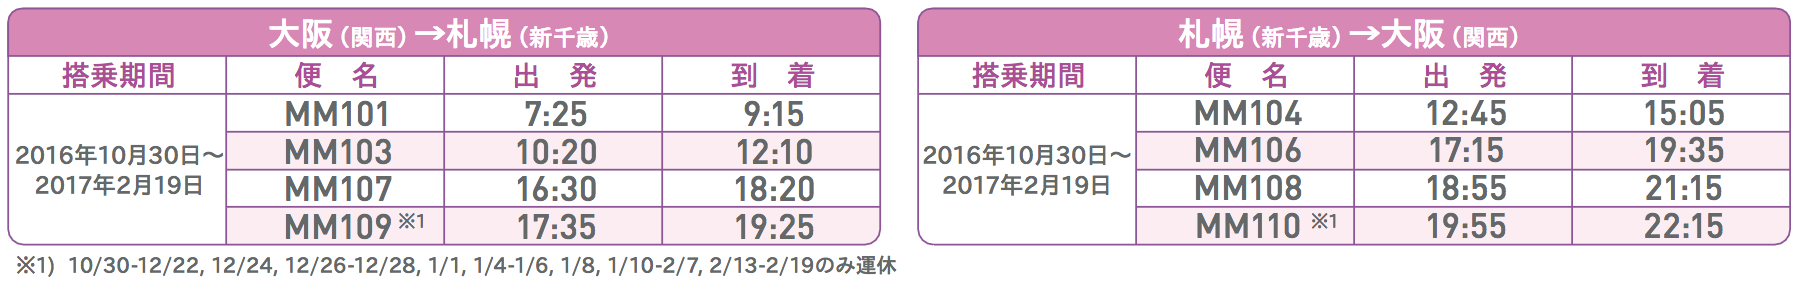 大阪 関西国際空港 北海道 新千歳空港 路線の時刻表 旅するlcc